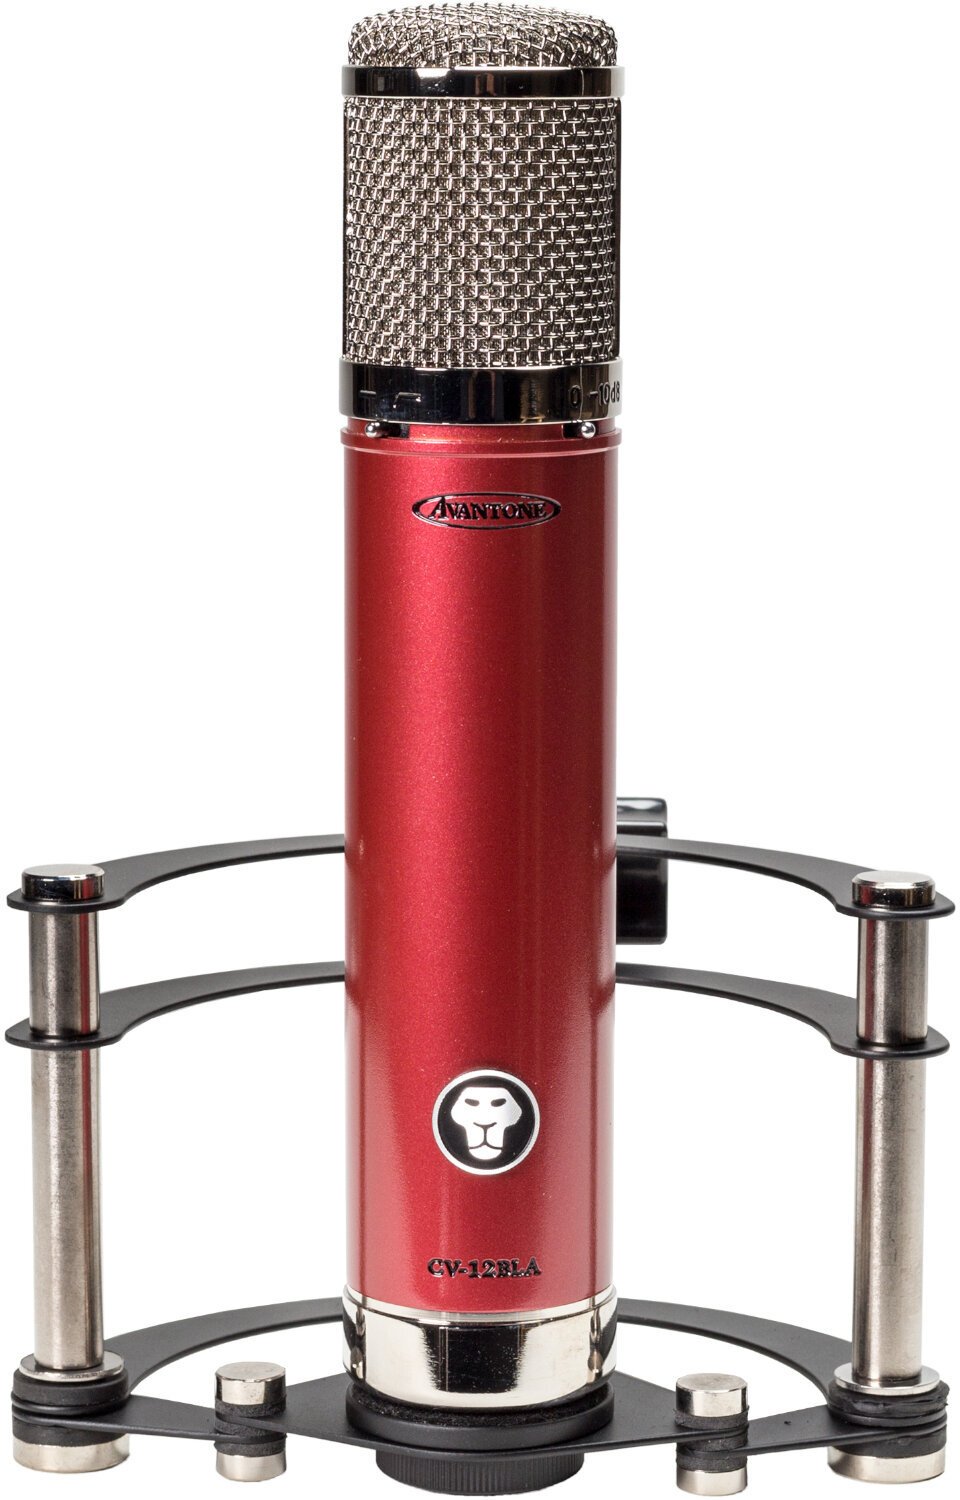 Studio Condenser Microphone Avantone Pro CV-12BLA Studio Condenser Microphone